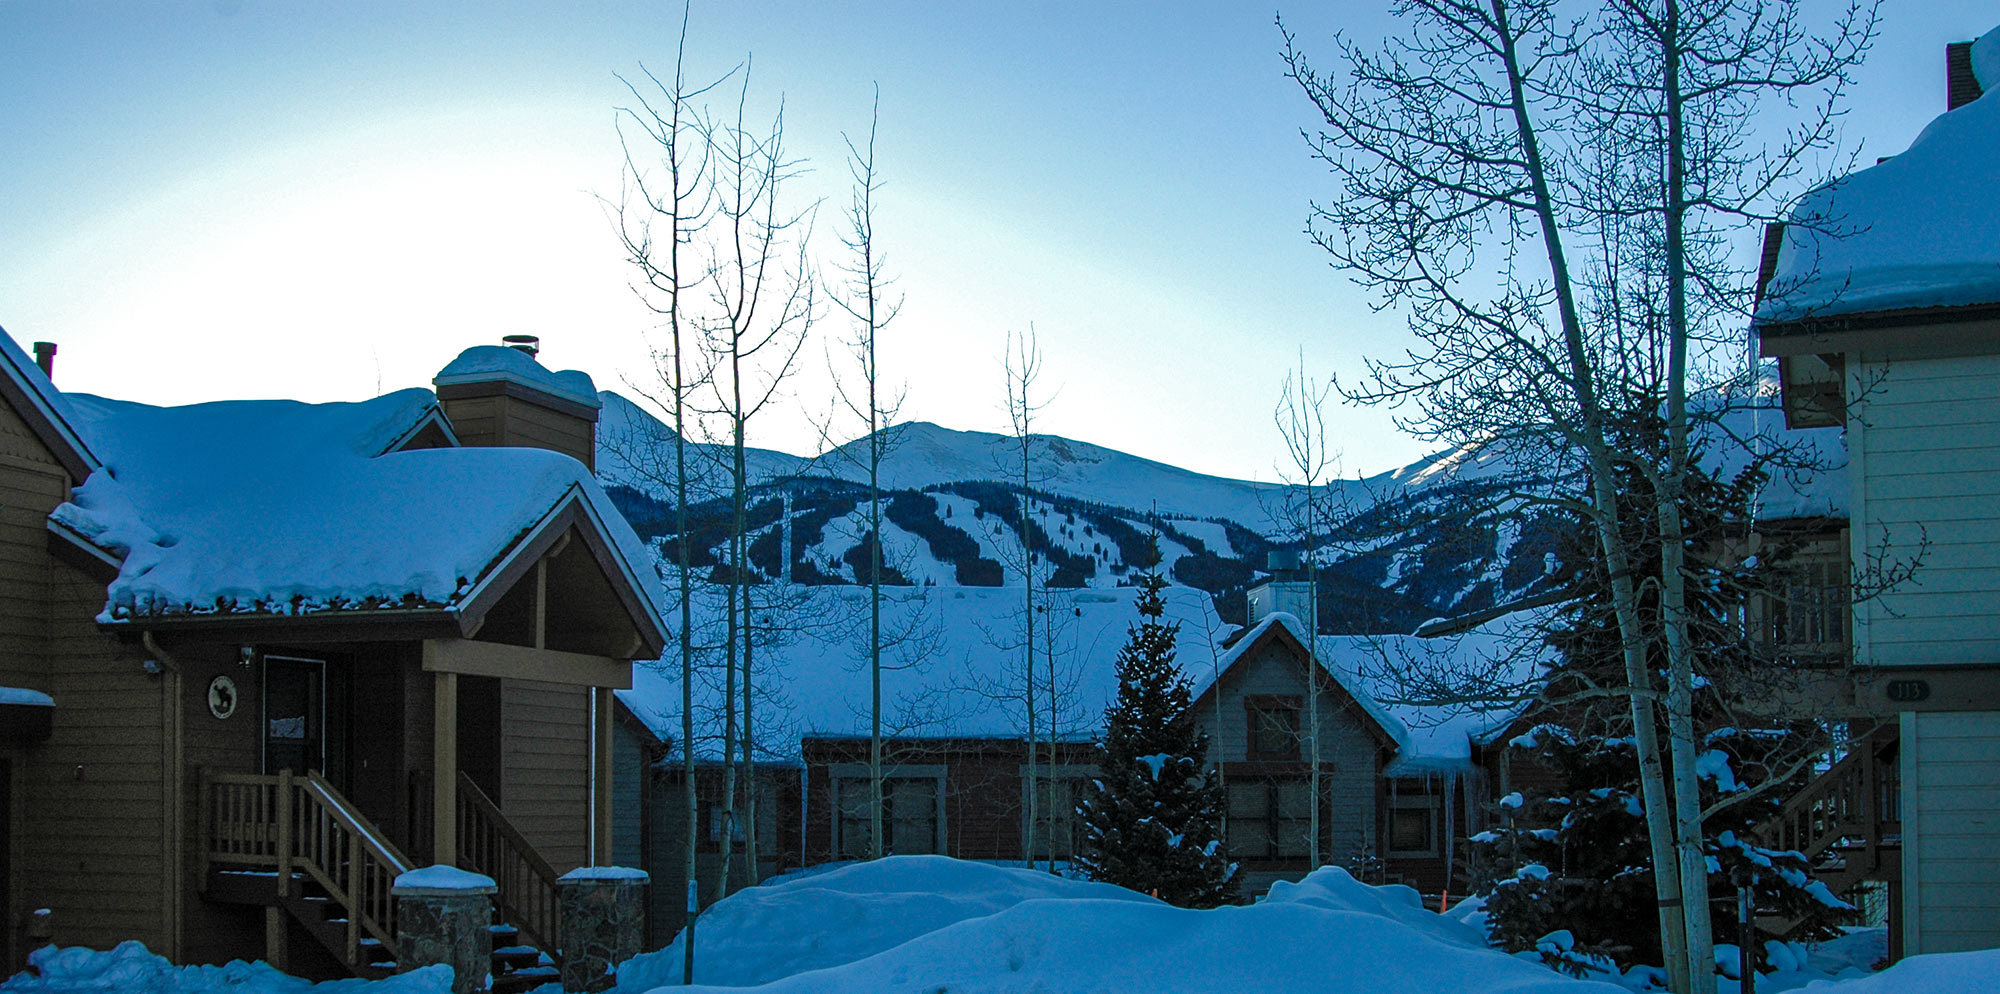 Breckenridge Mountain Village and its view to the Breckenridge Ski Resort